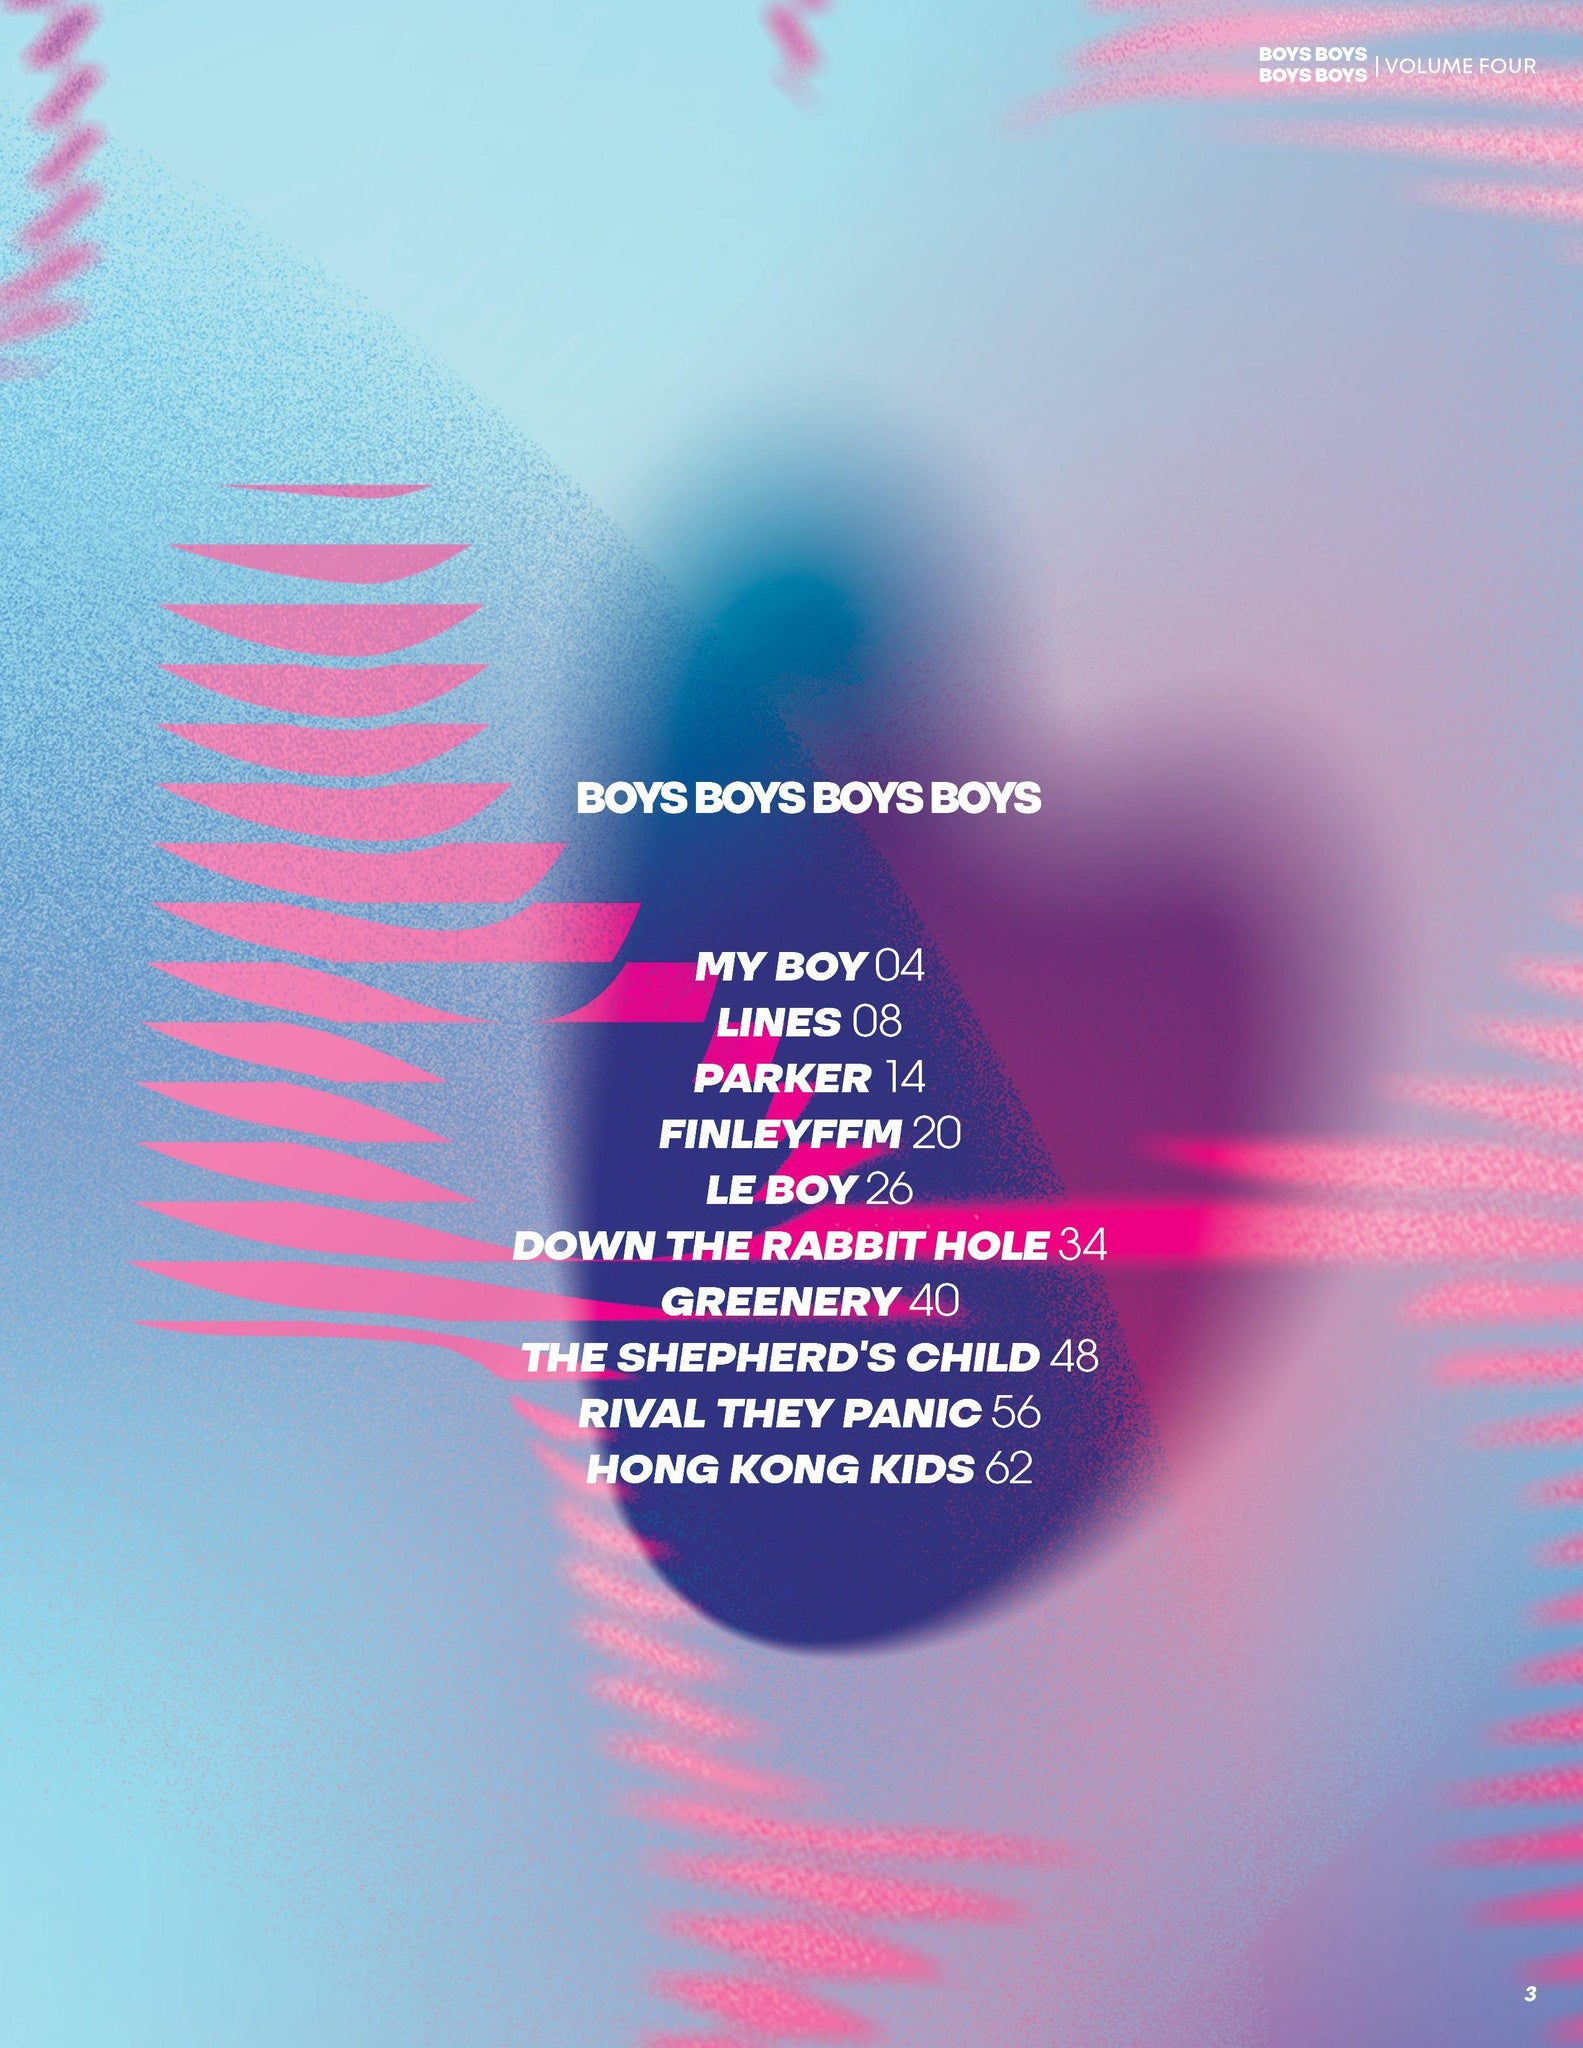 BOYS BOYS BOYS BOYS | VOLUME FOUR | ISSUE #12 - Mob Journal